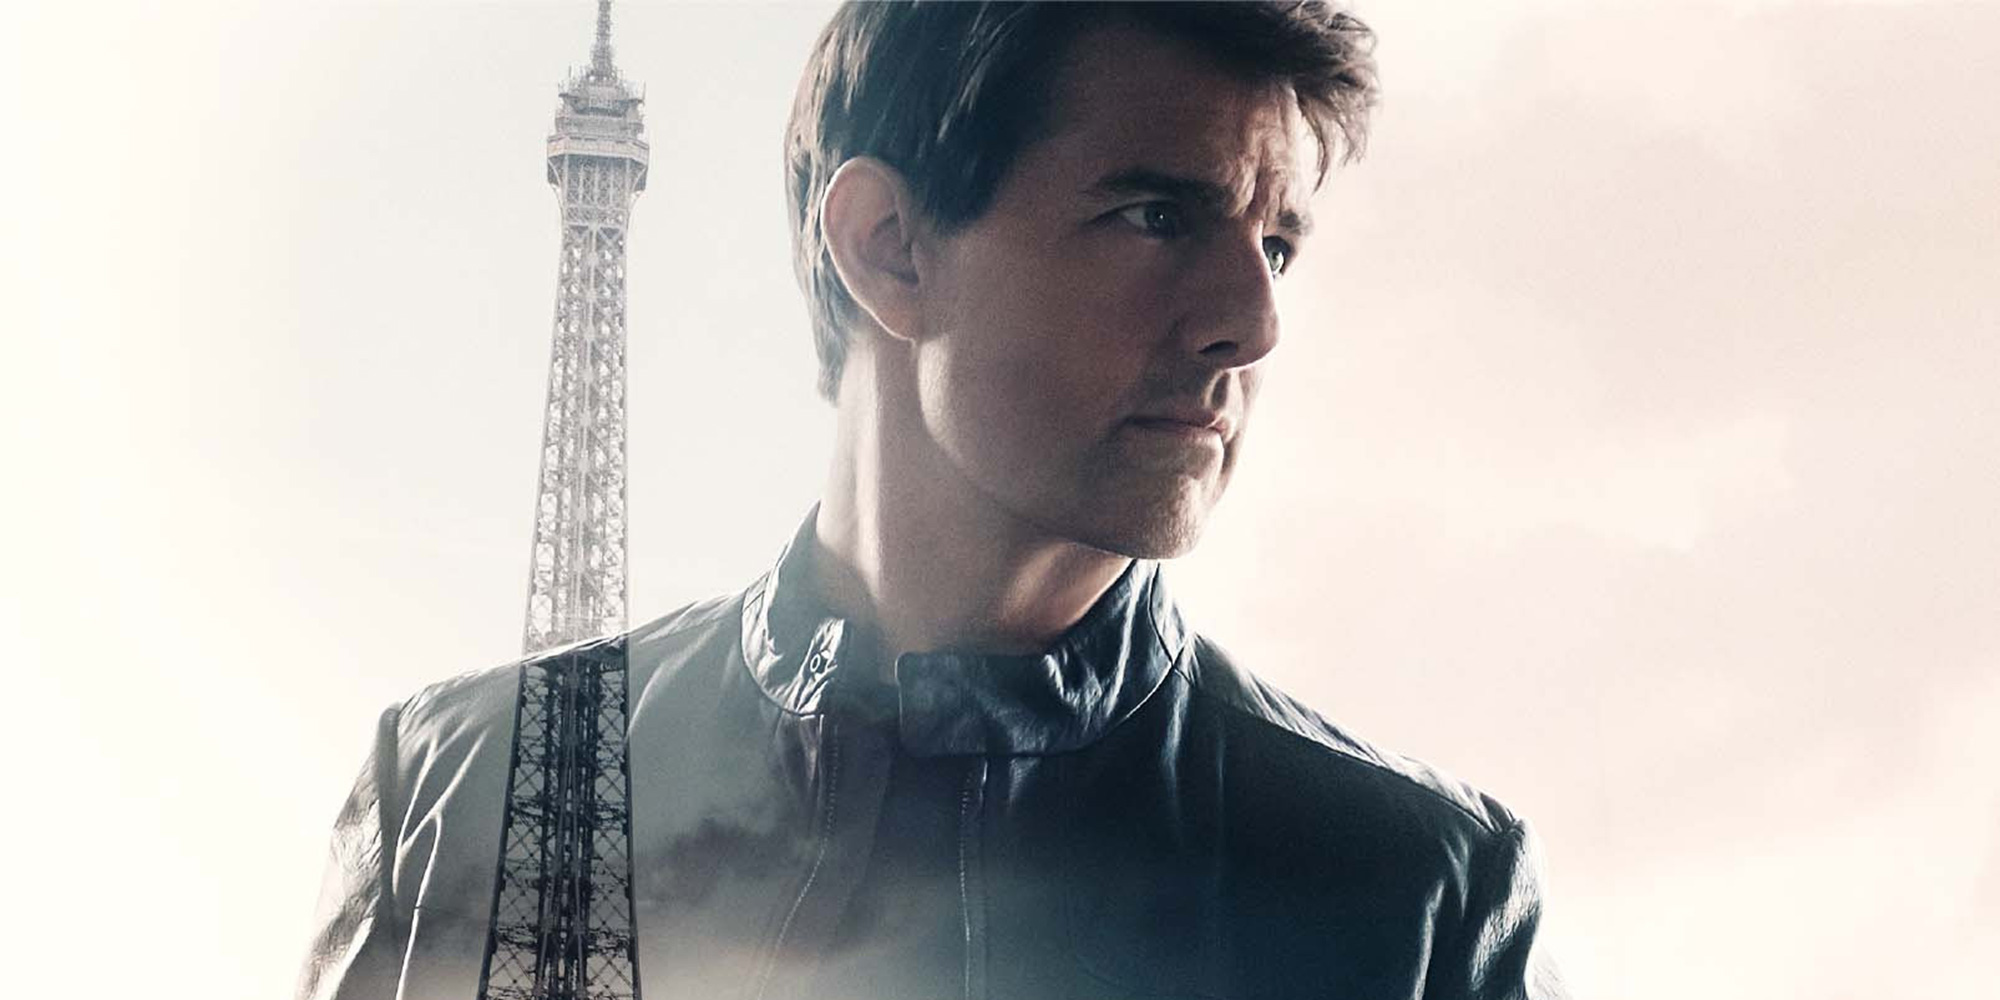  Bande-annonce EXPLOSIVE pour Mission Impossible – Fallout !